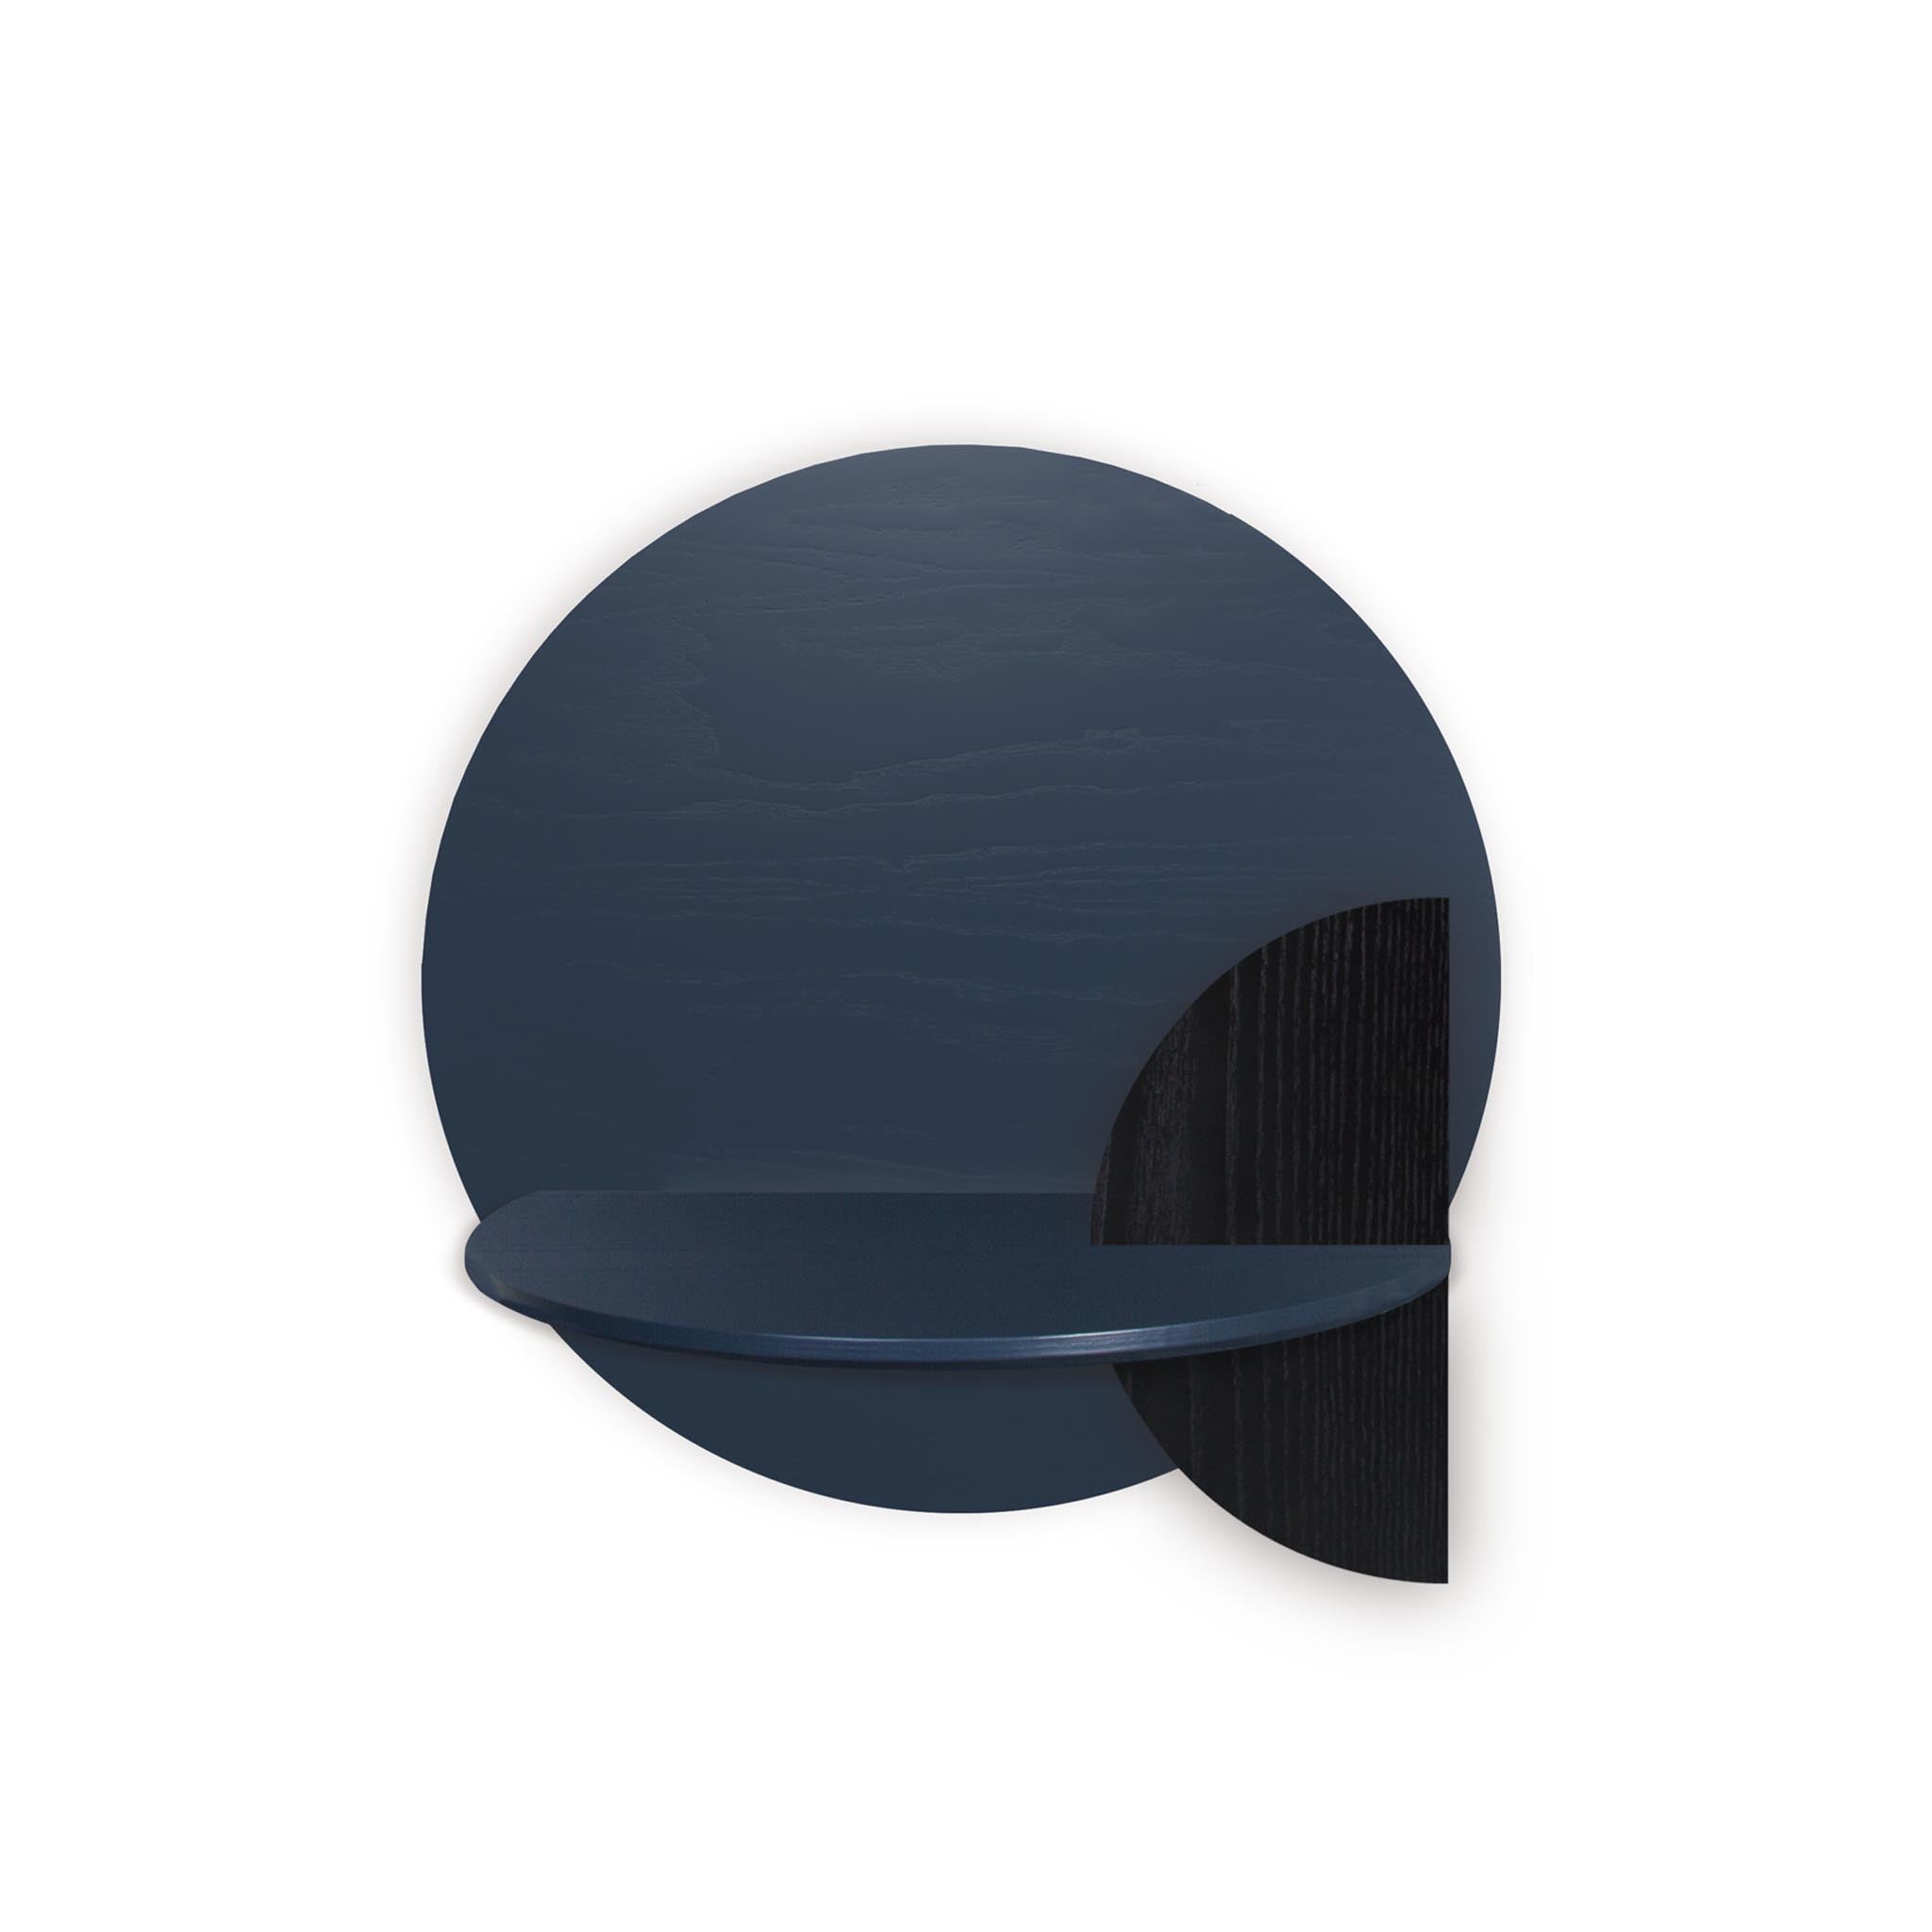 Alba floating nightstand DUO · Blue circle